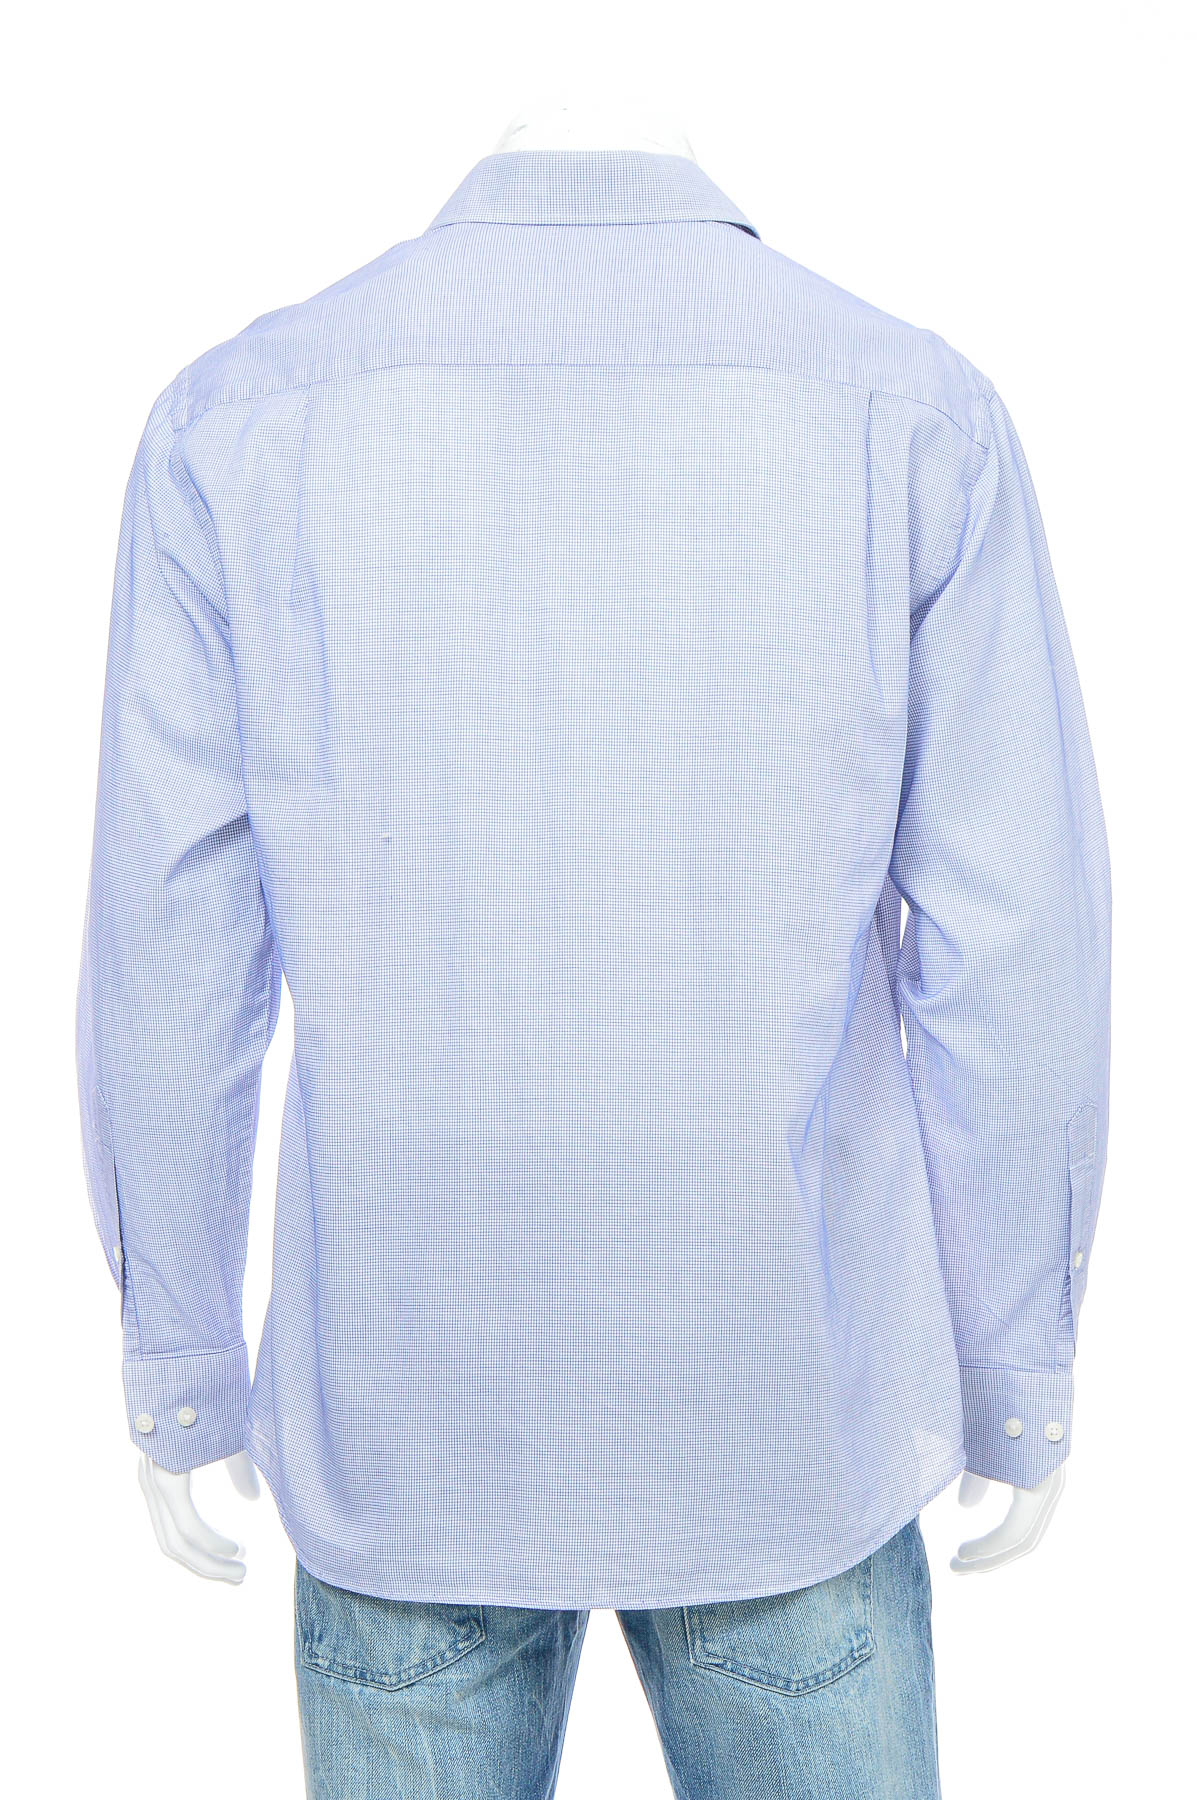 Men's shirt - Digel - 1